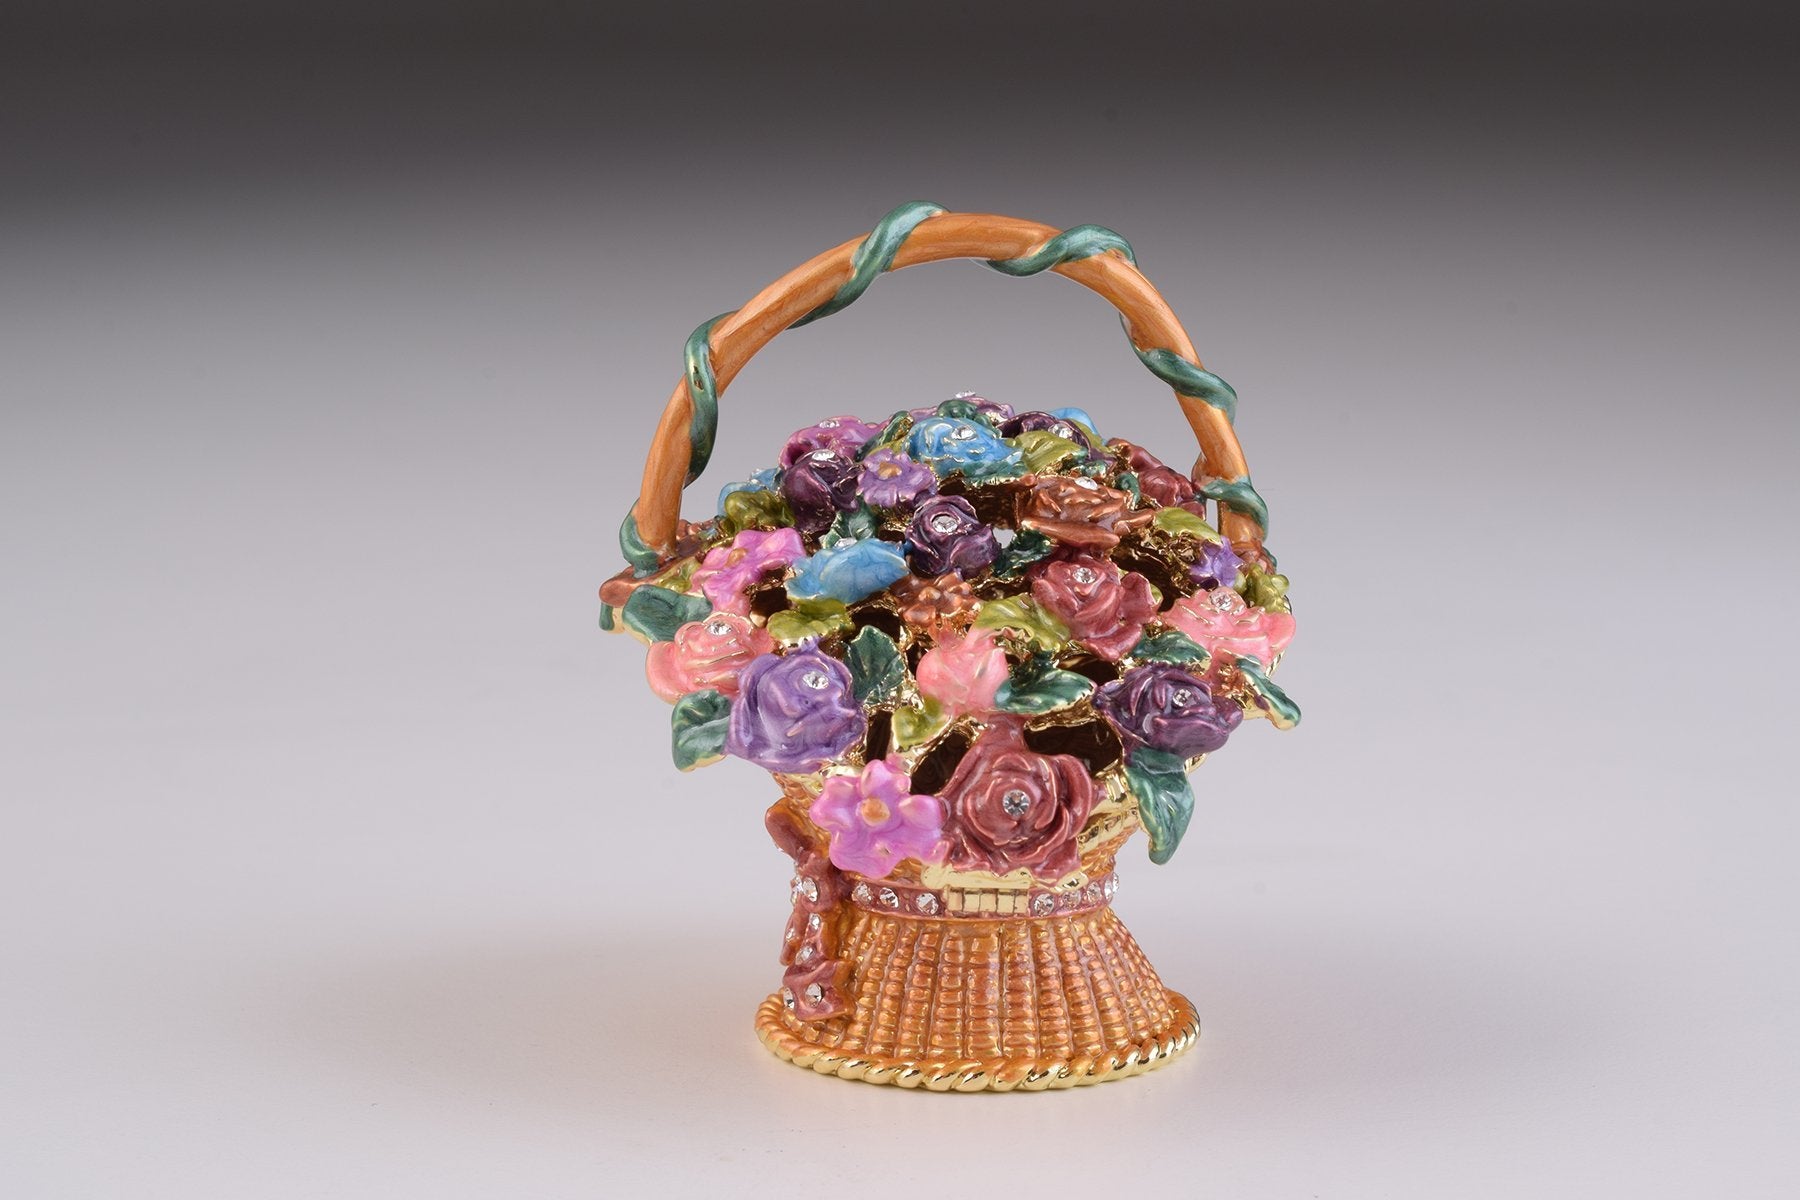 Keren Kopal Colorful Vase Trinket Box  66.50